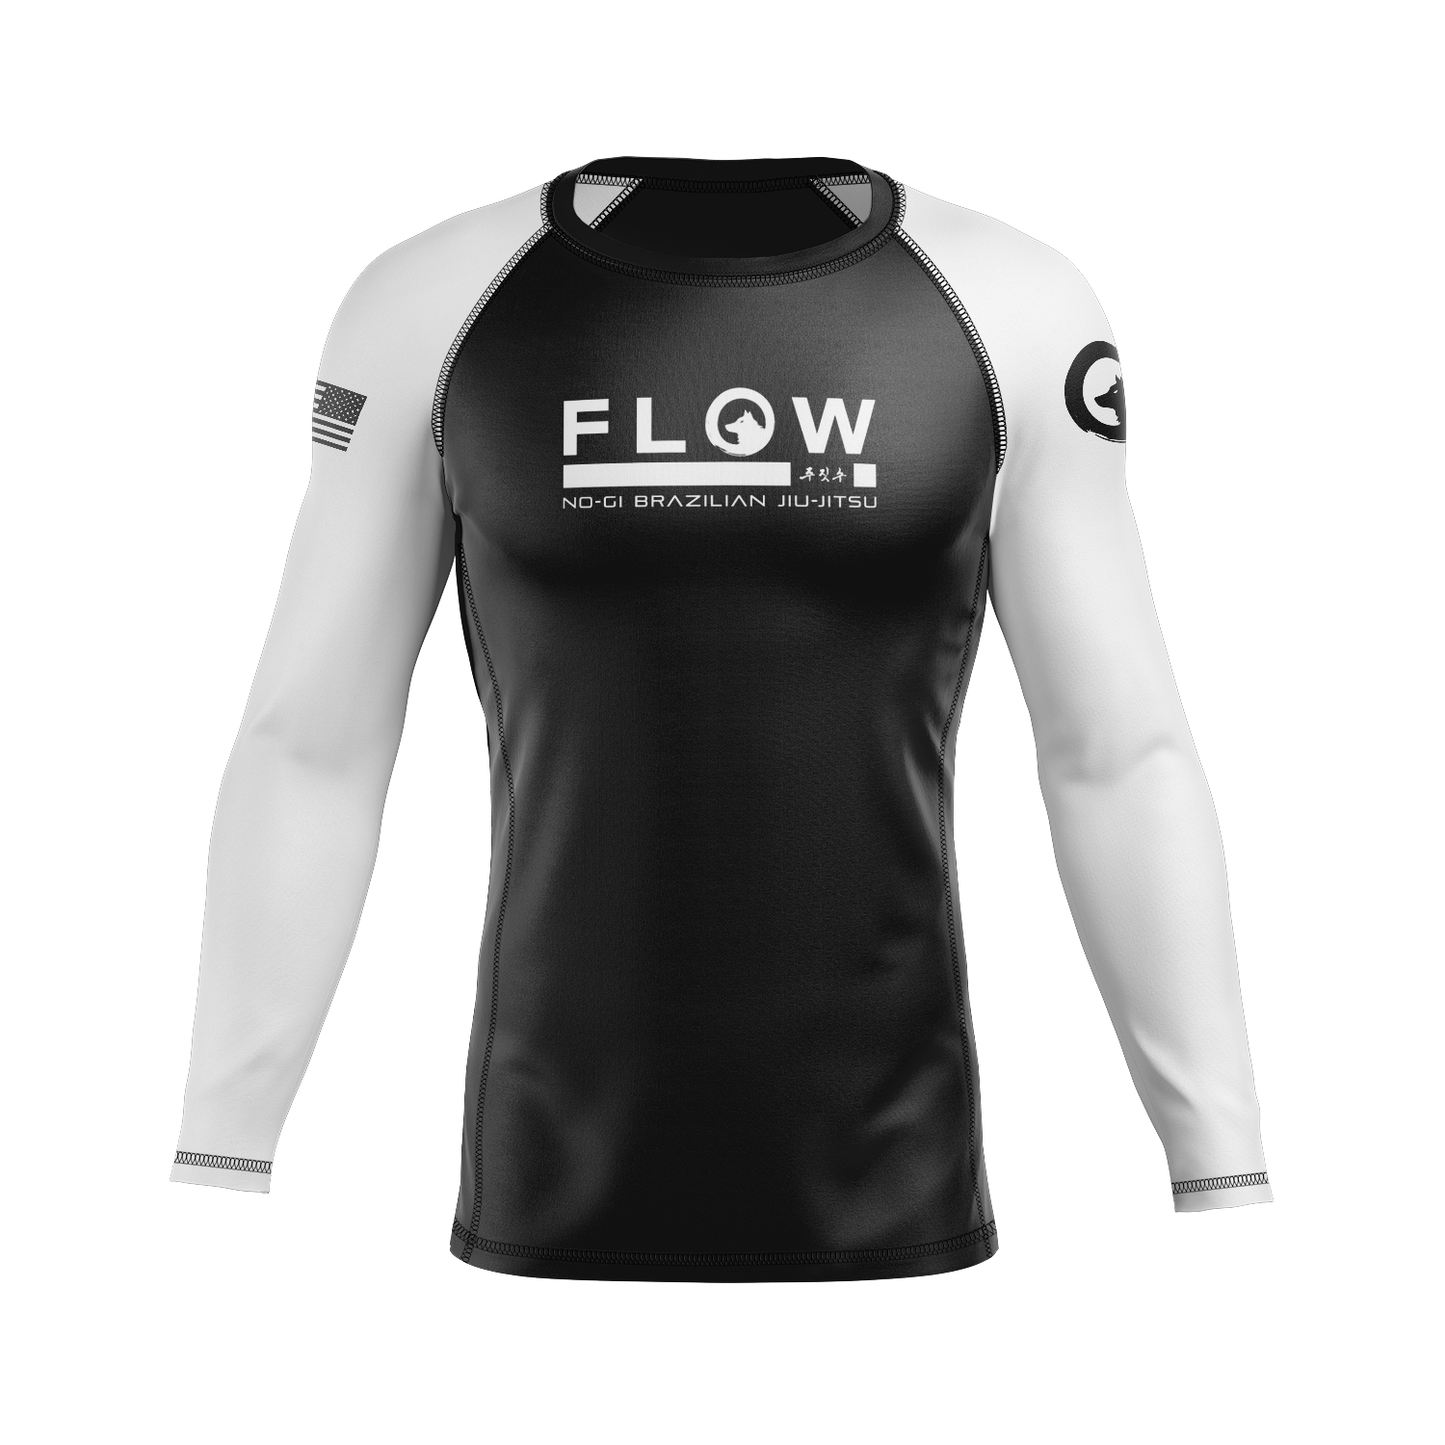 Flow BJJ men's rash guard Standard Issue, black and white